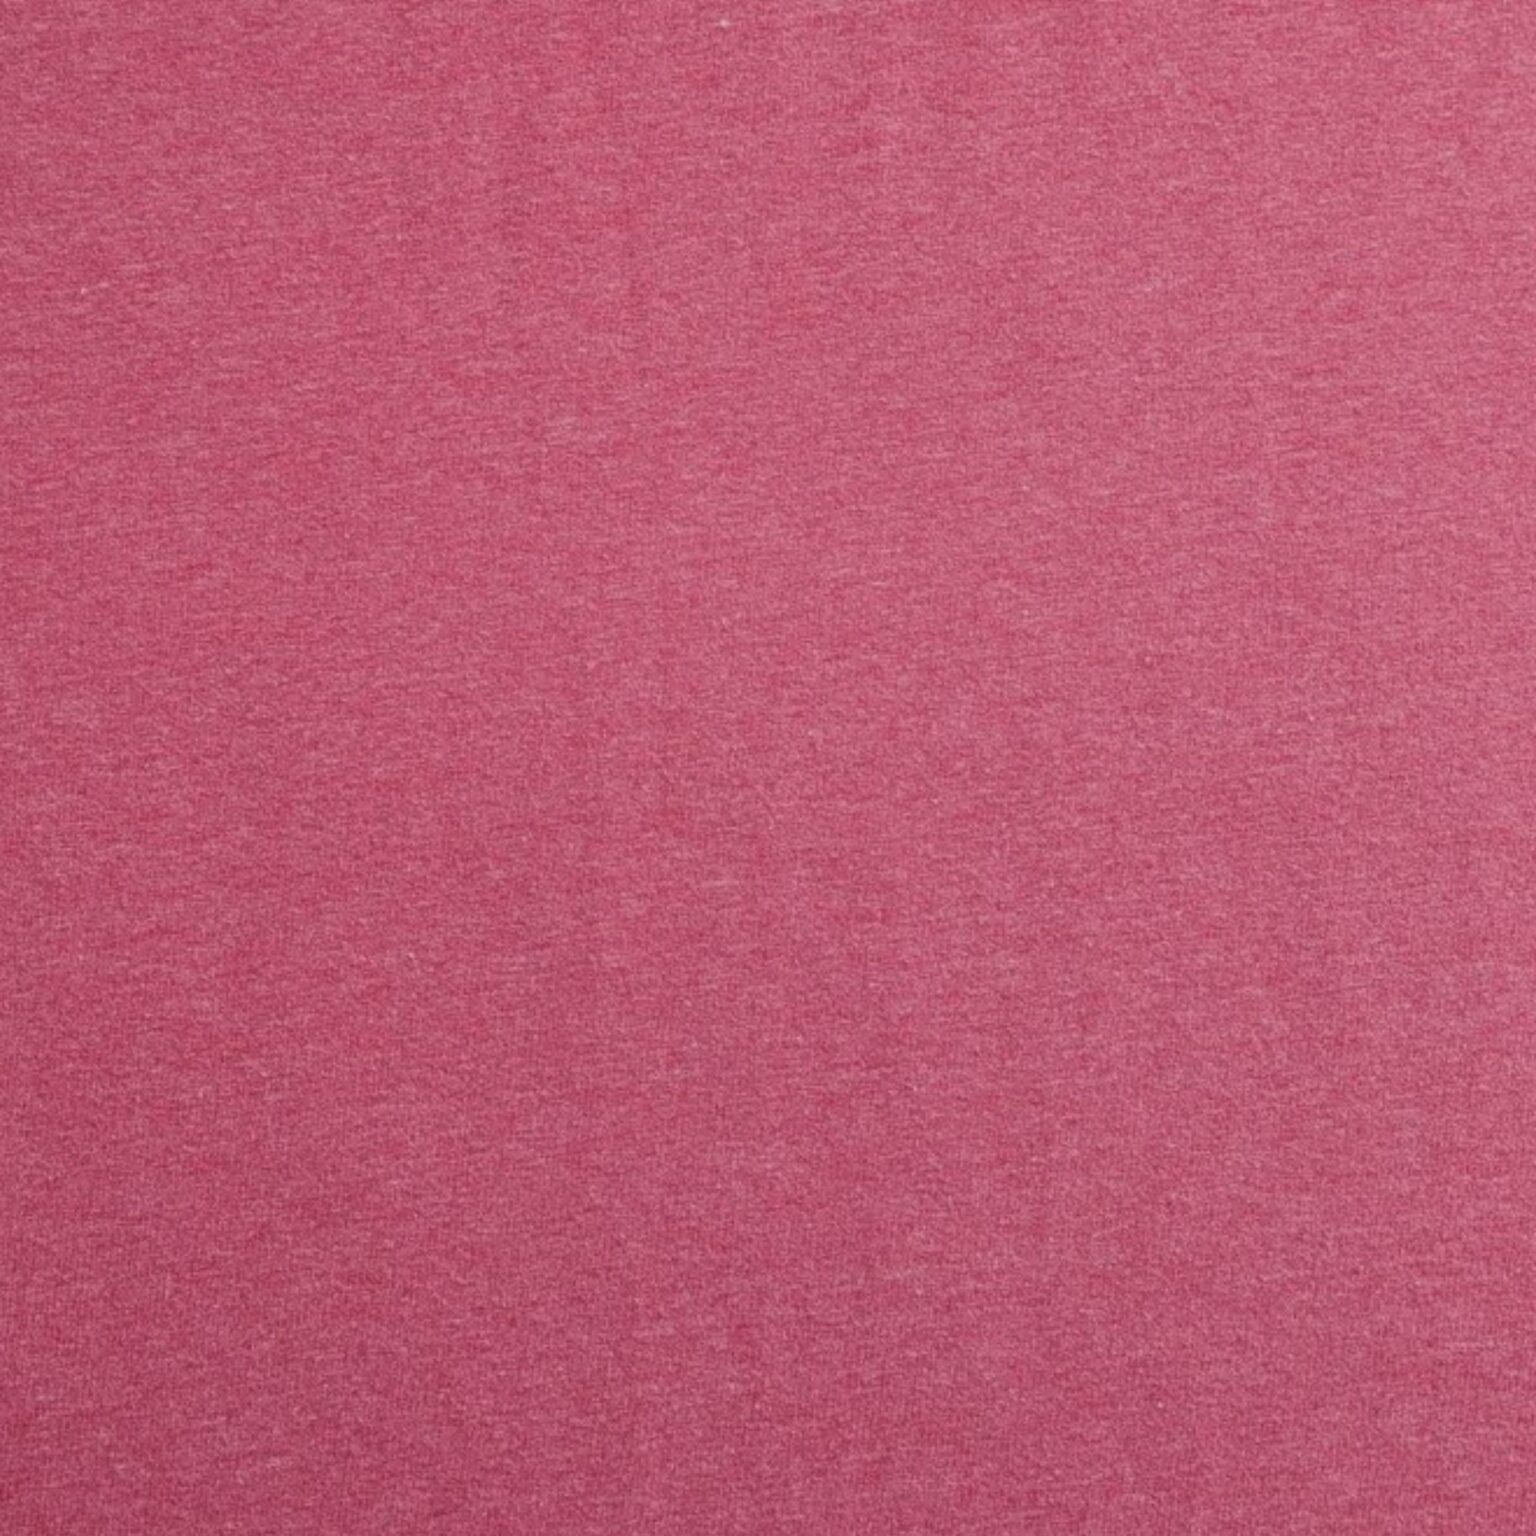 Cotton Jersey Fabric - Raspberry Melange Four Way Stretch - 150cm Wide